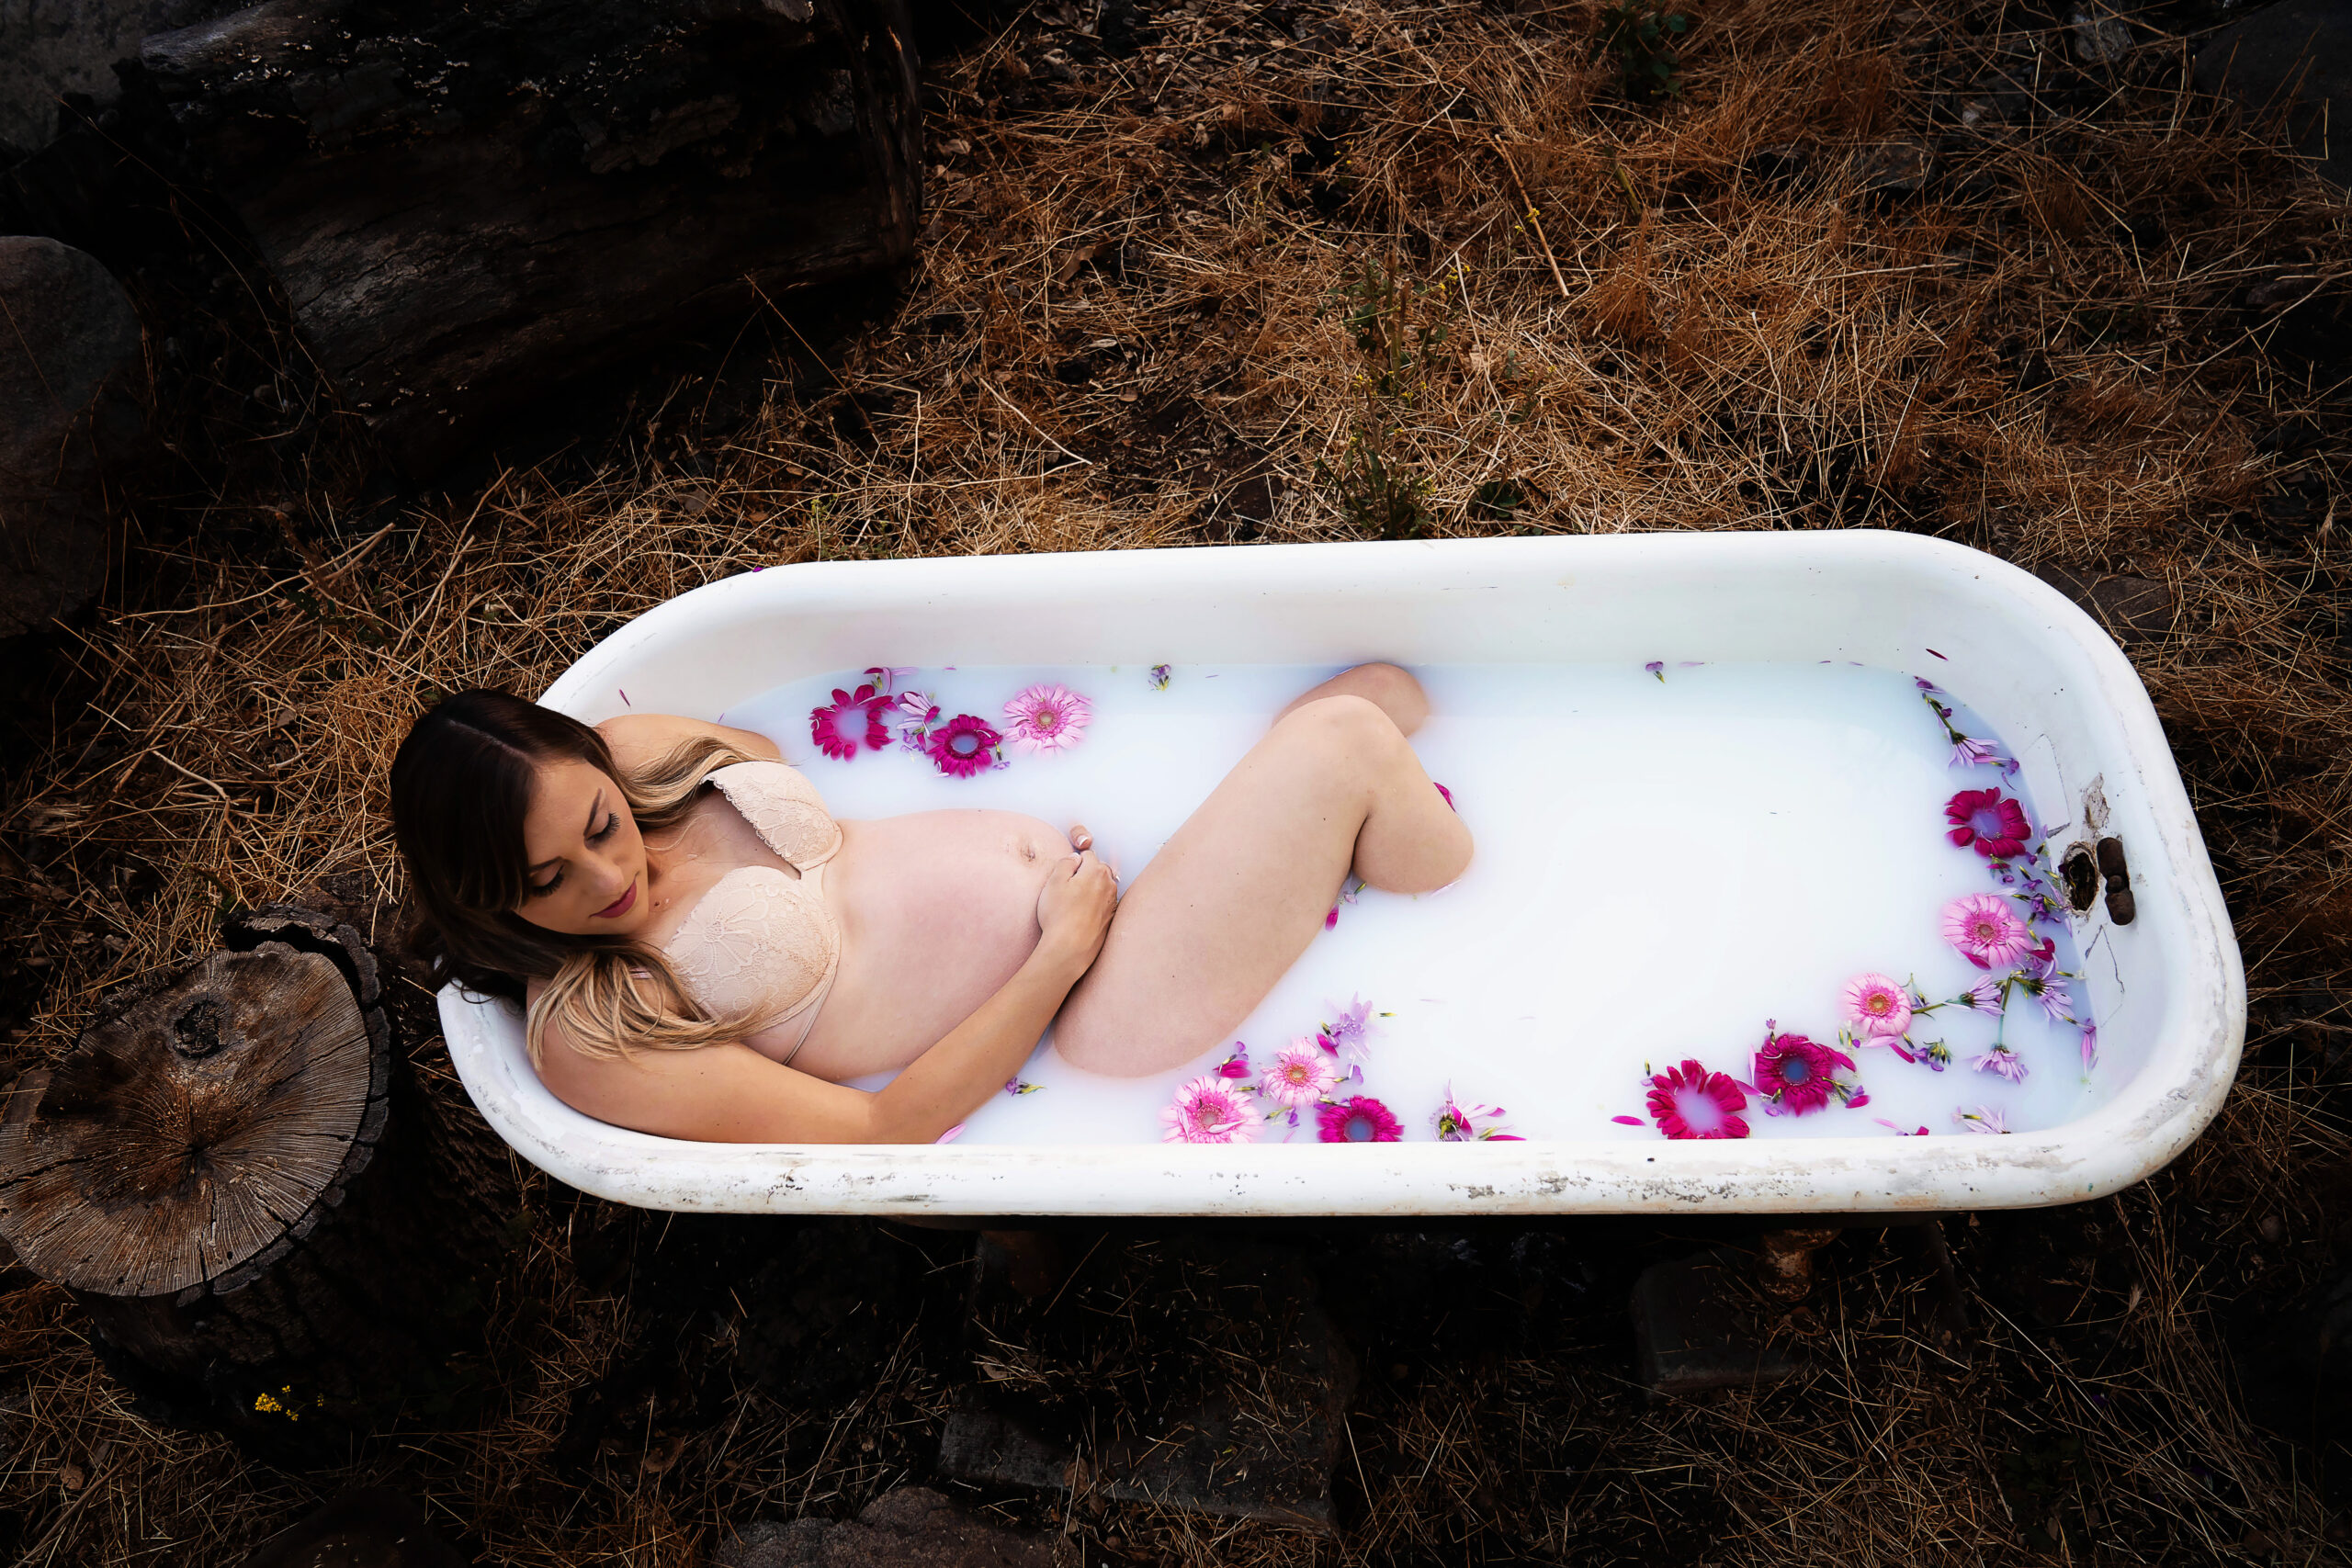 Woman lays in outdoor bathtub for boudoir maternity photos also known as a milk bath.